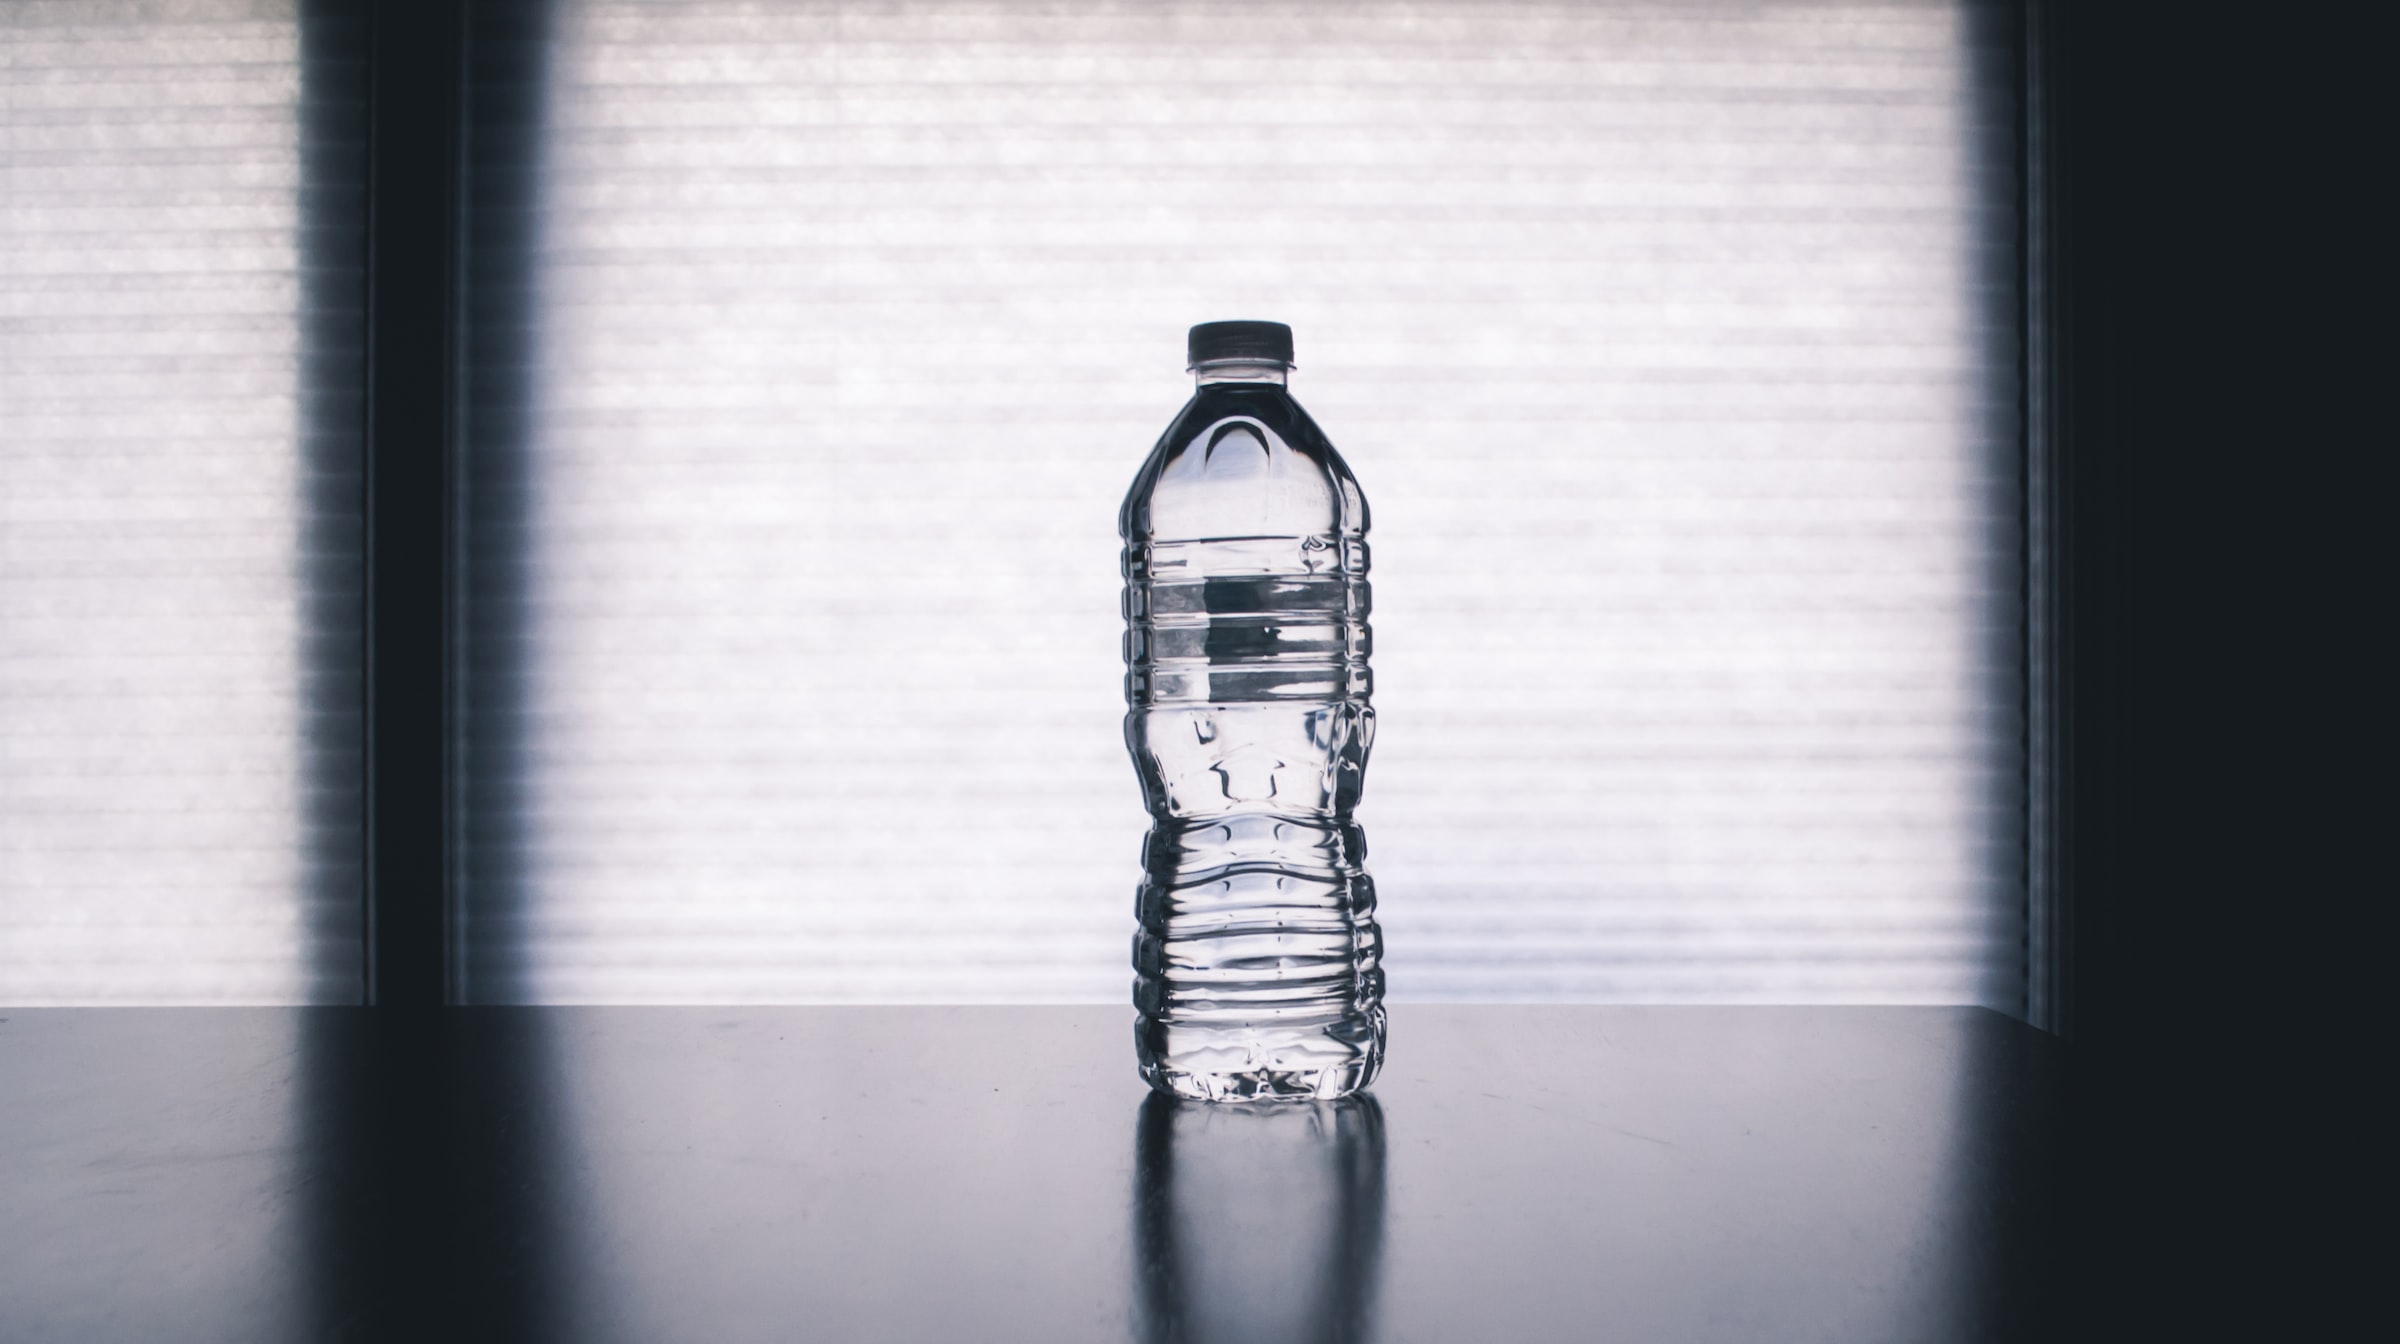 A plastic water bottle seen through bars